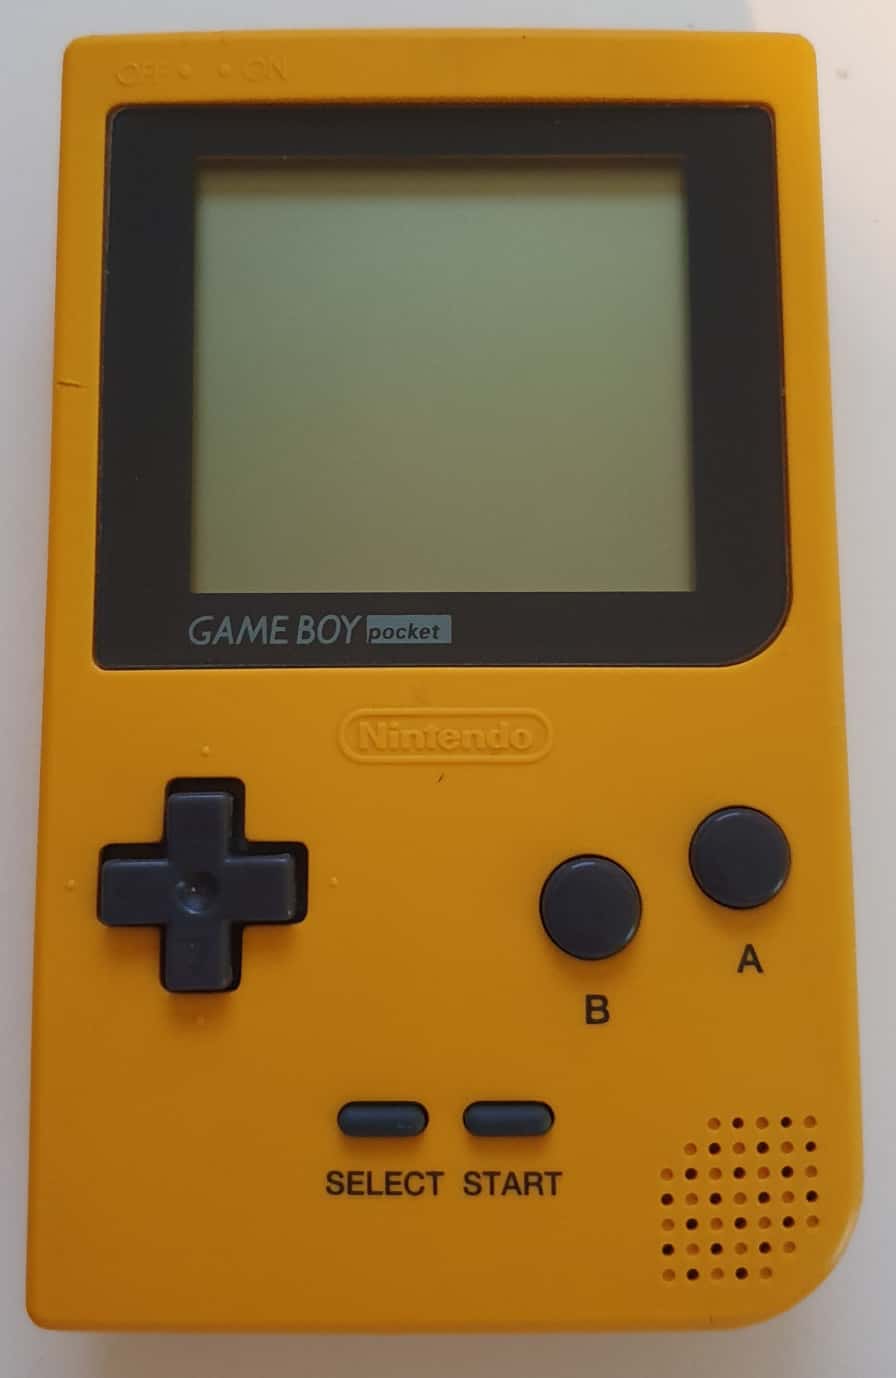 MGB: MG10718164-0 [curbsideaudio] - Game Boy hardware database